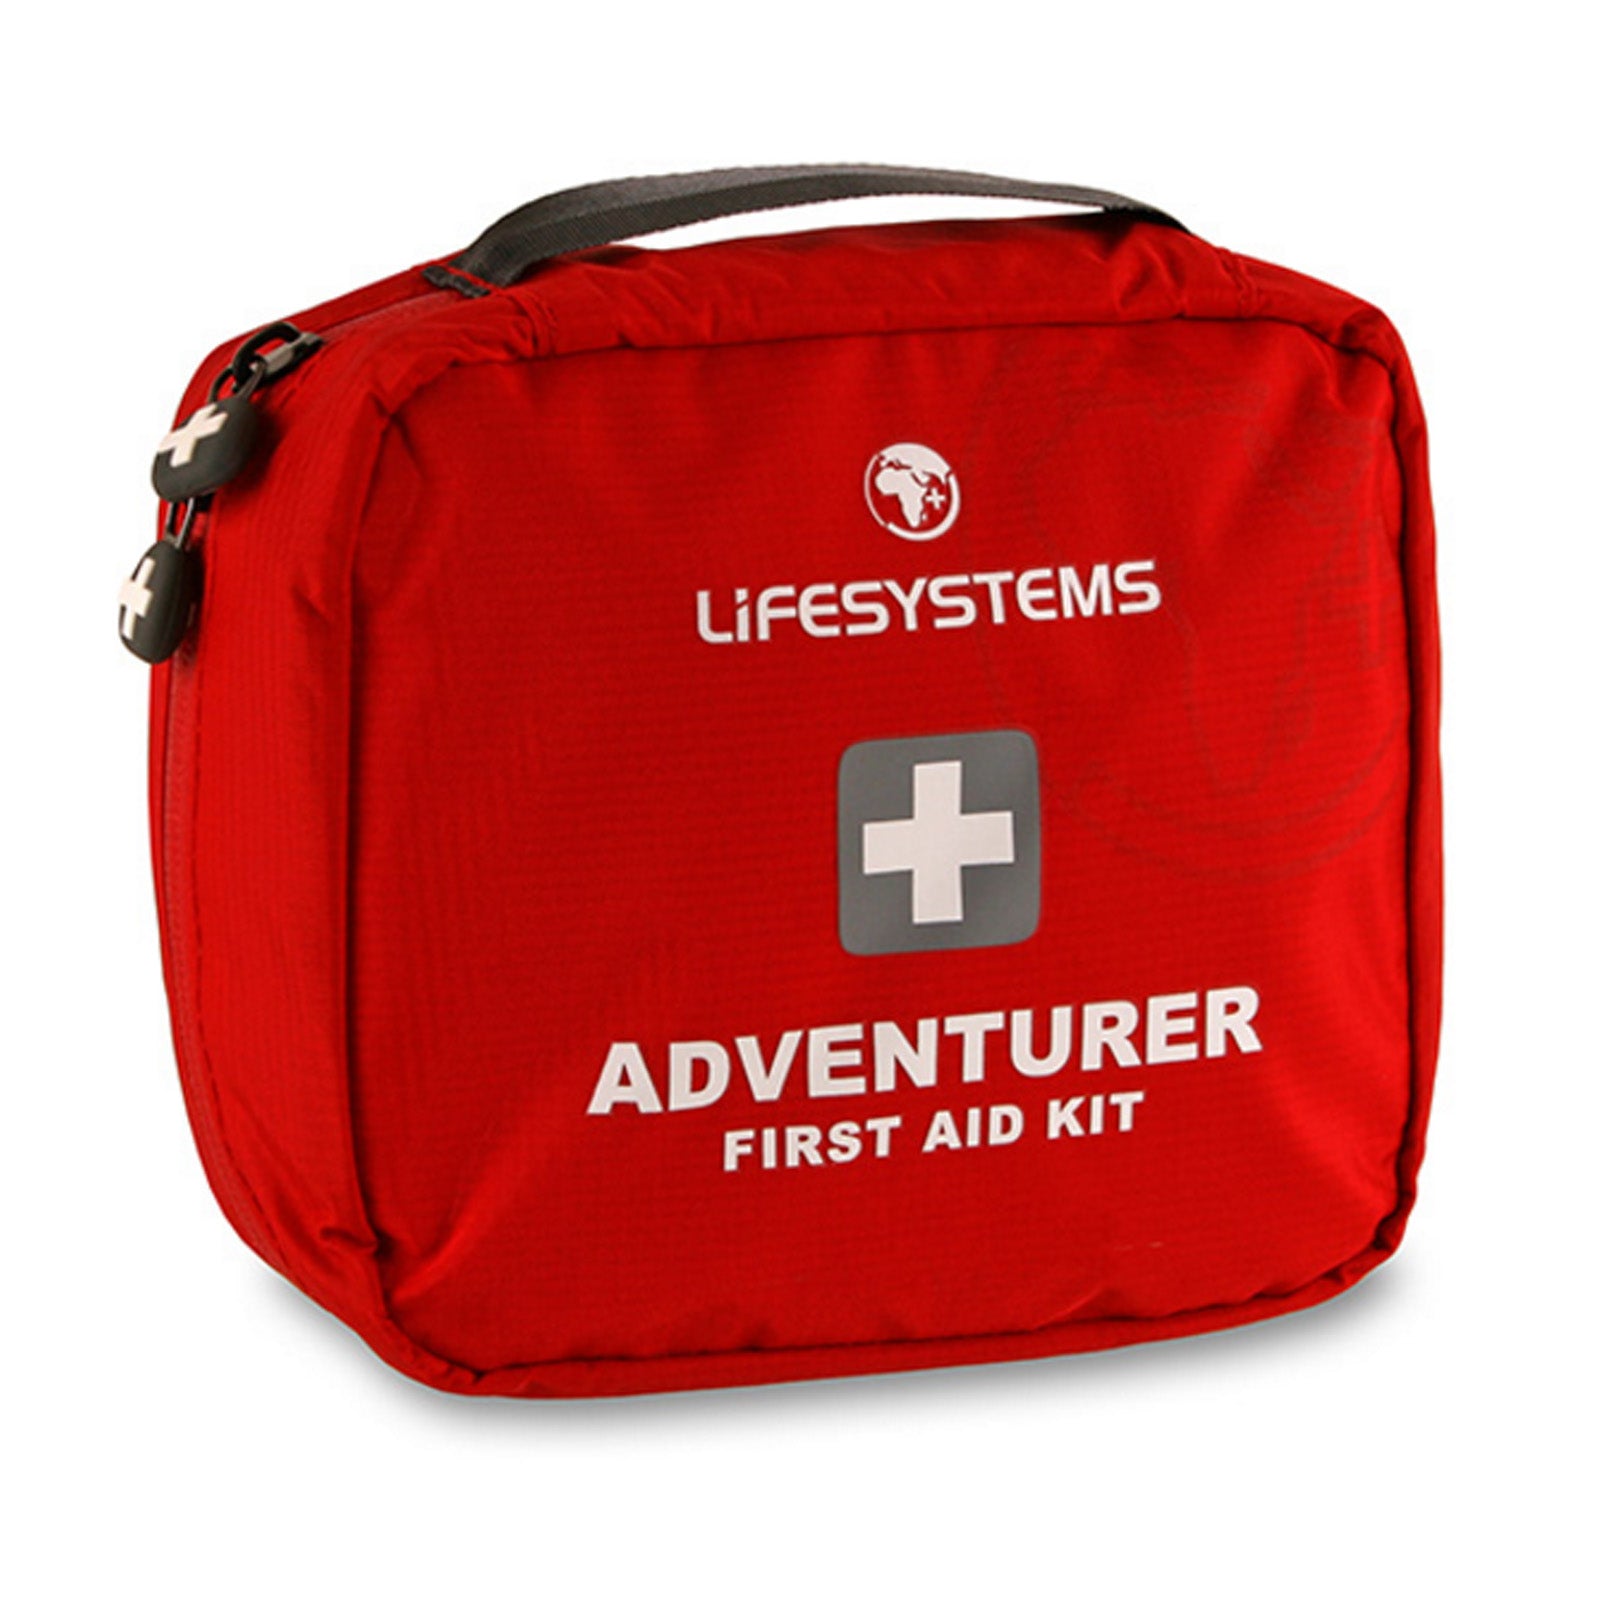 Lifesystems - Adventurer First Aid Kit